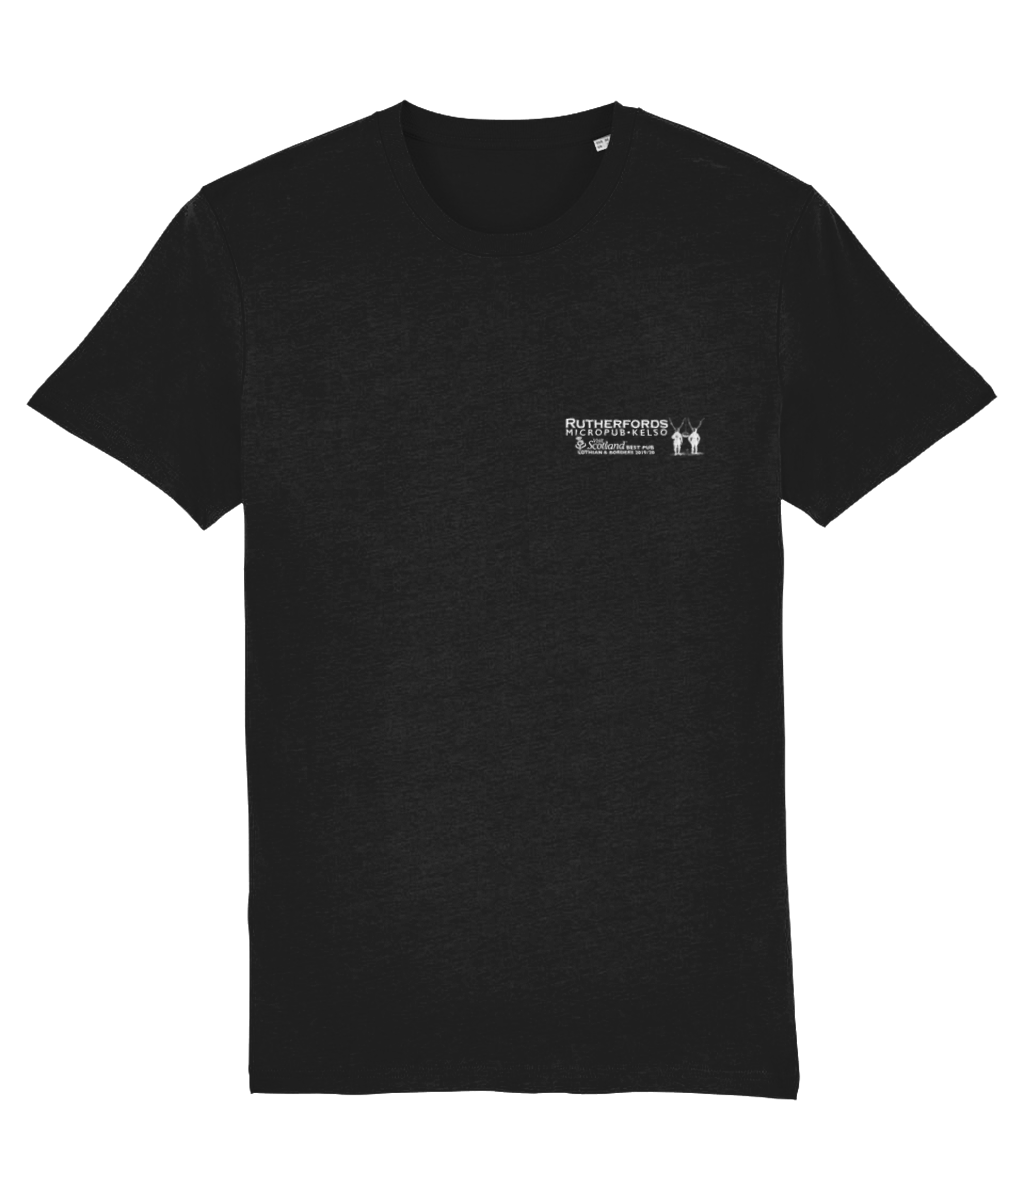 Rutherfords Black T-Shirt » UK Micropubs